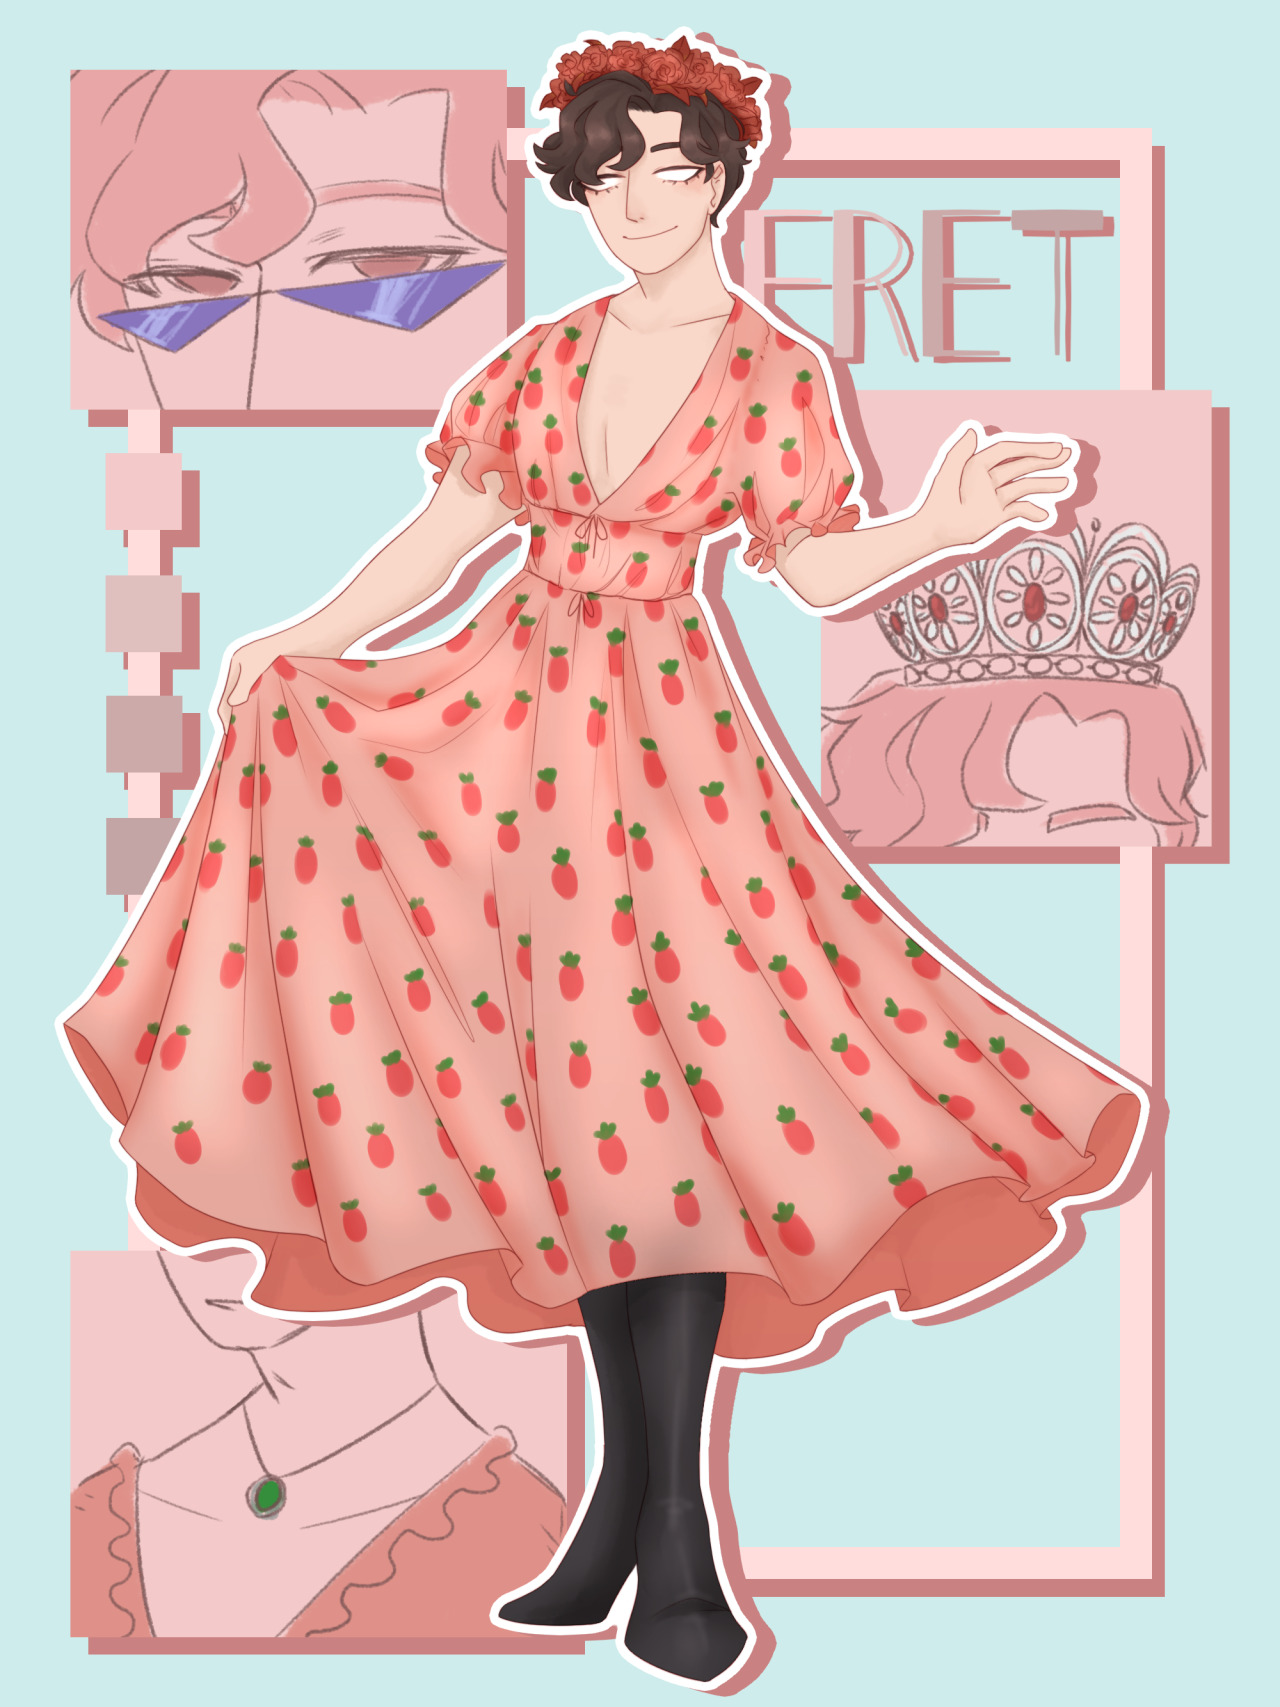 eret strawberry dress drawing